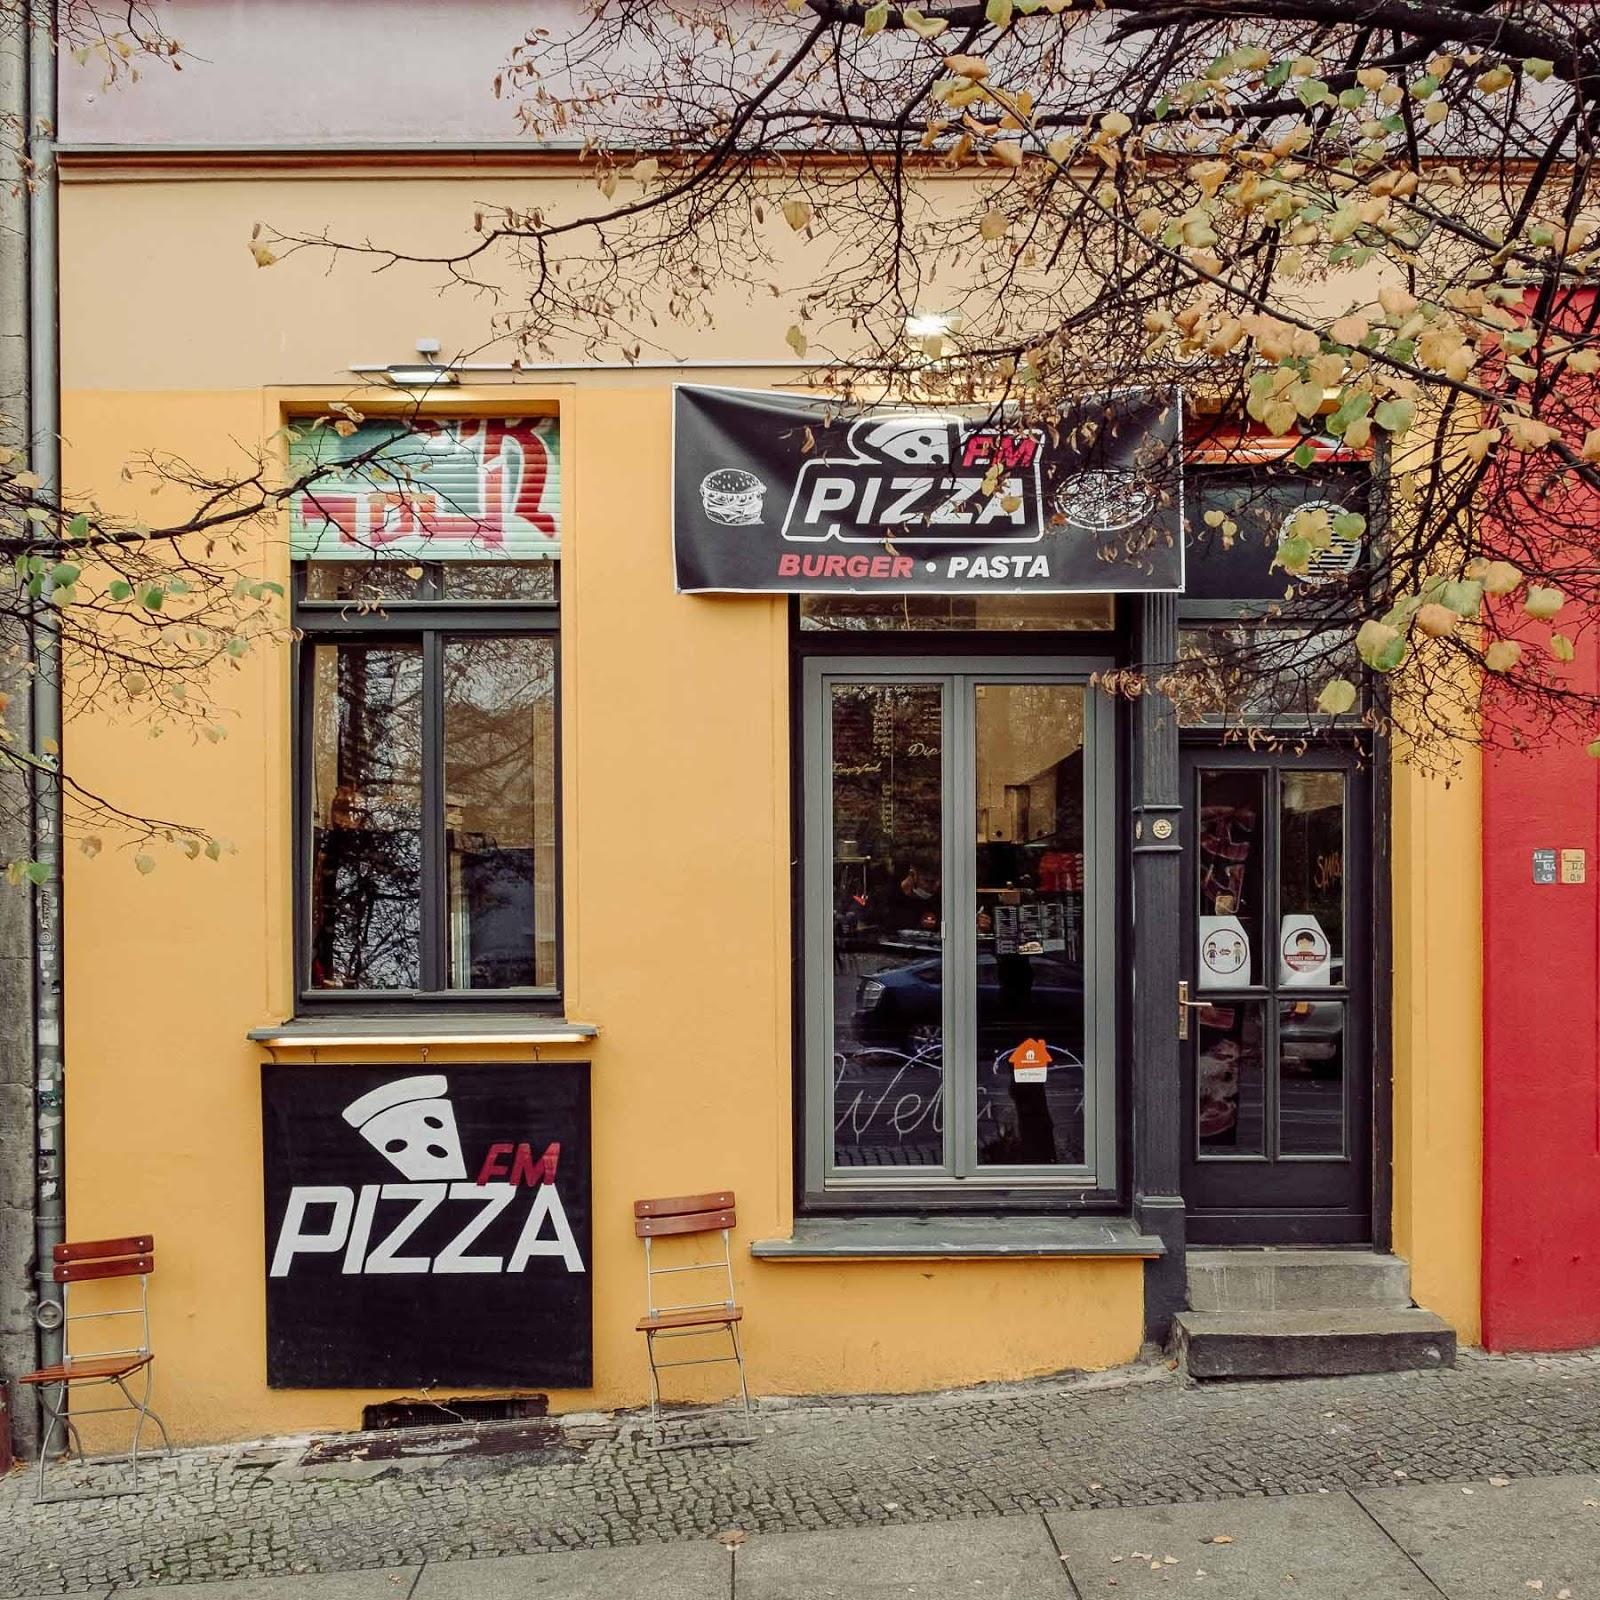 Restaurant "Pizza FM" in Berlin